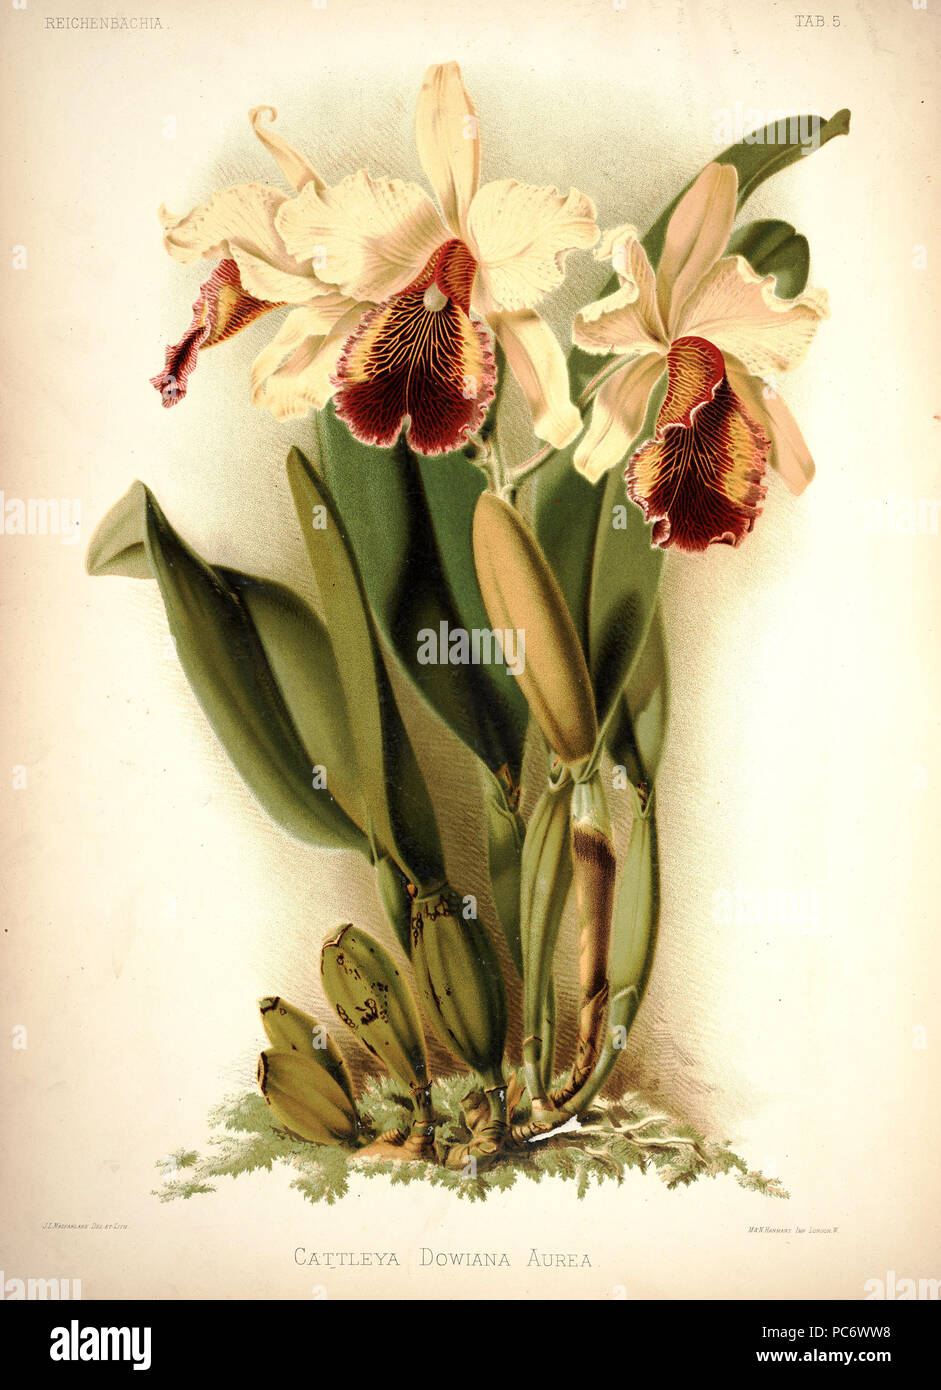 220 Frederick Sander - Reichenbachia I plate 05 (1888) - Cattleya dowiana aurea Stock Photo